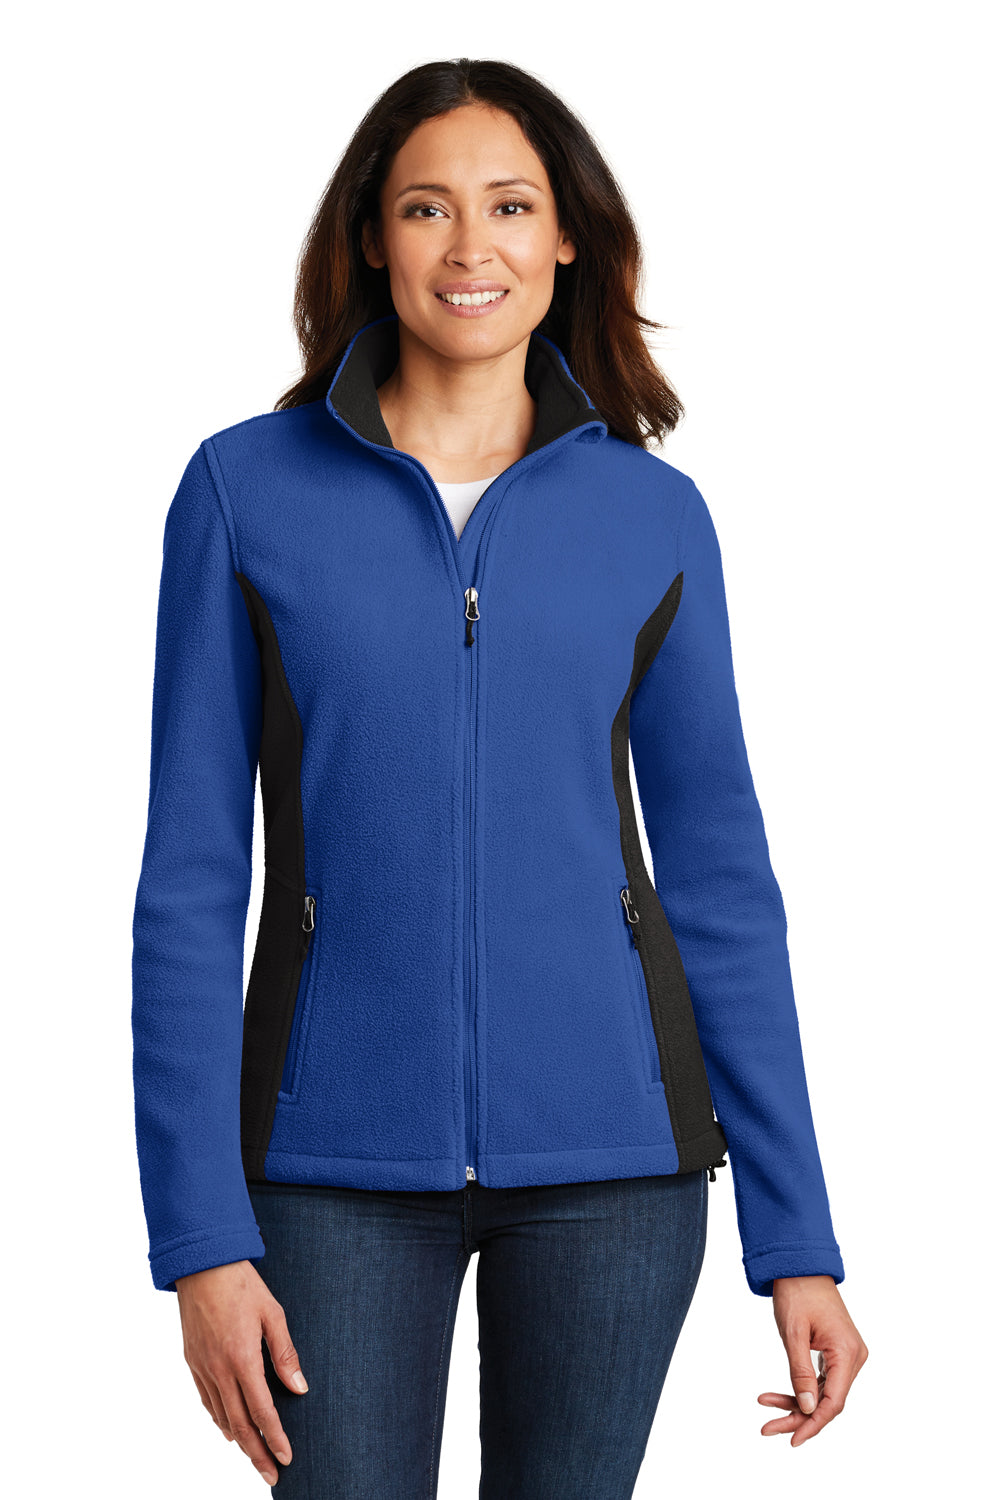 Port Authority L216 Womens Full Zip Fleece Jacket Royal Blue/Black Front